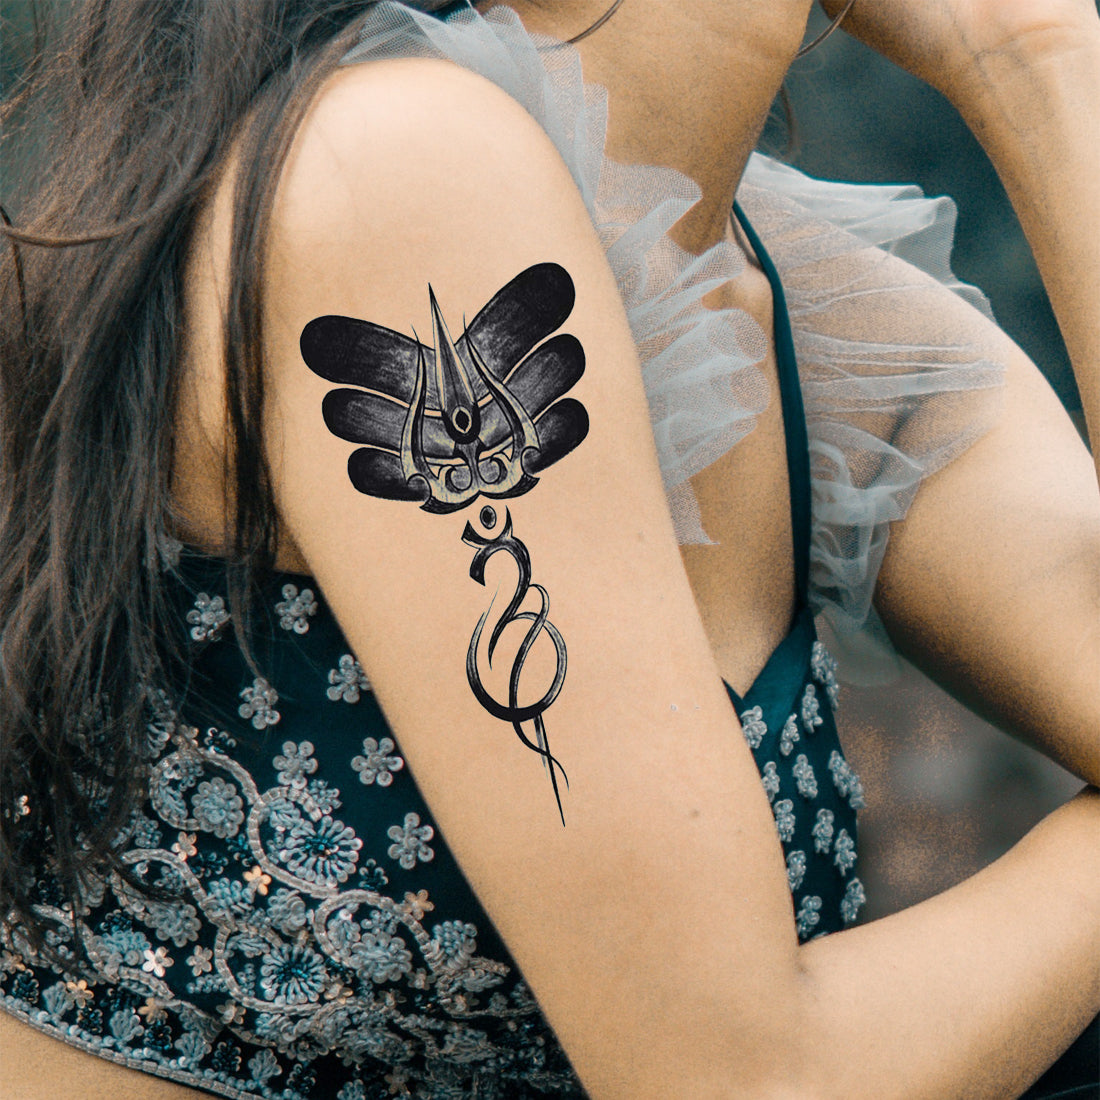 Tattoo uploaded by Vipul Chaudhary • Mahadev band tattoo |Mahadev band  tattoo design |Mahadev tattoo |Shiva tattoo |Bholenath tattoo • Tattoodo